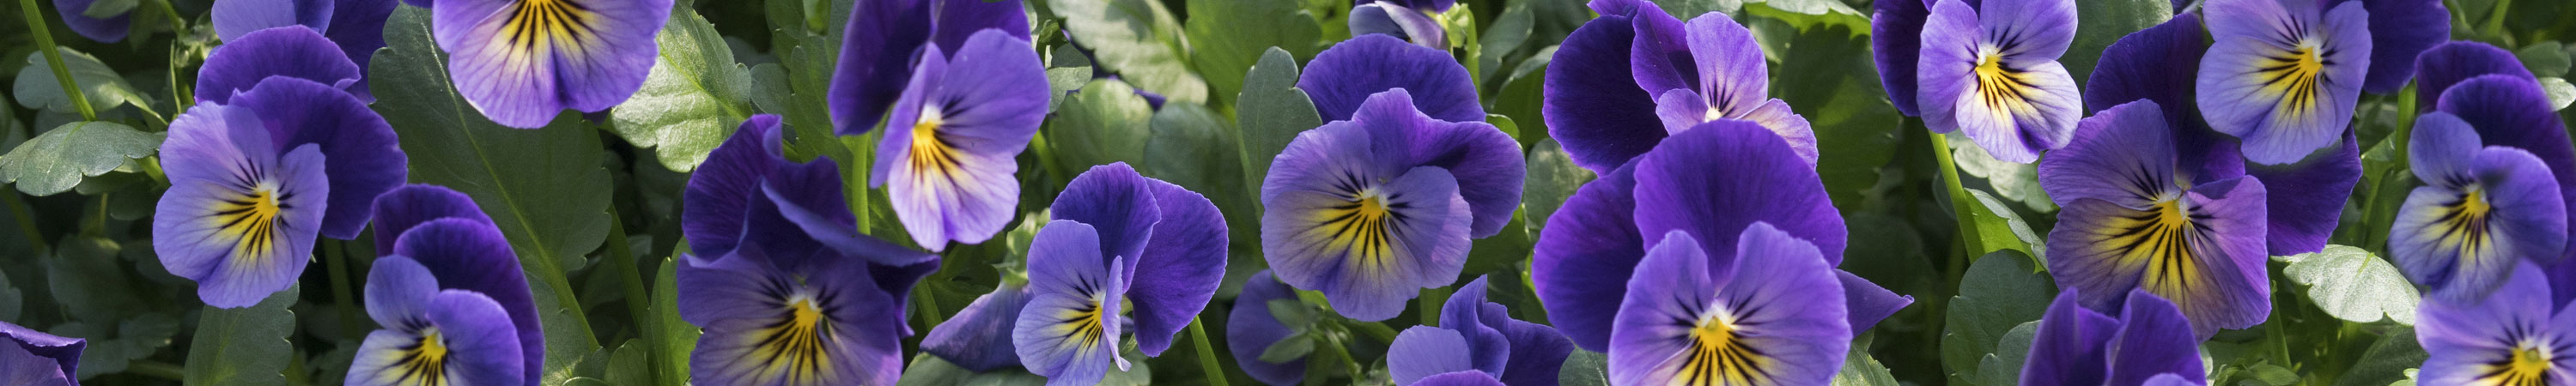 Viola / Violet Plants